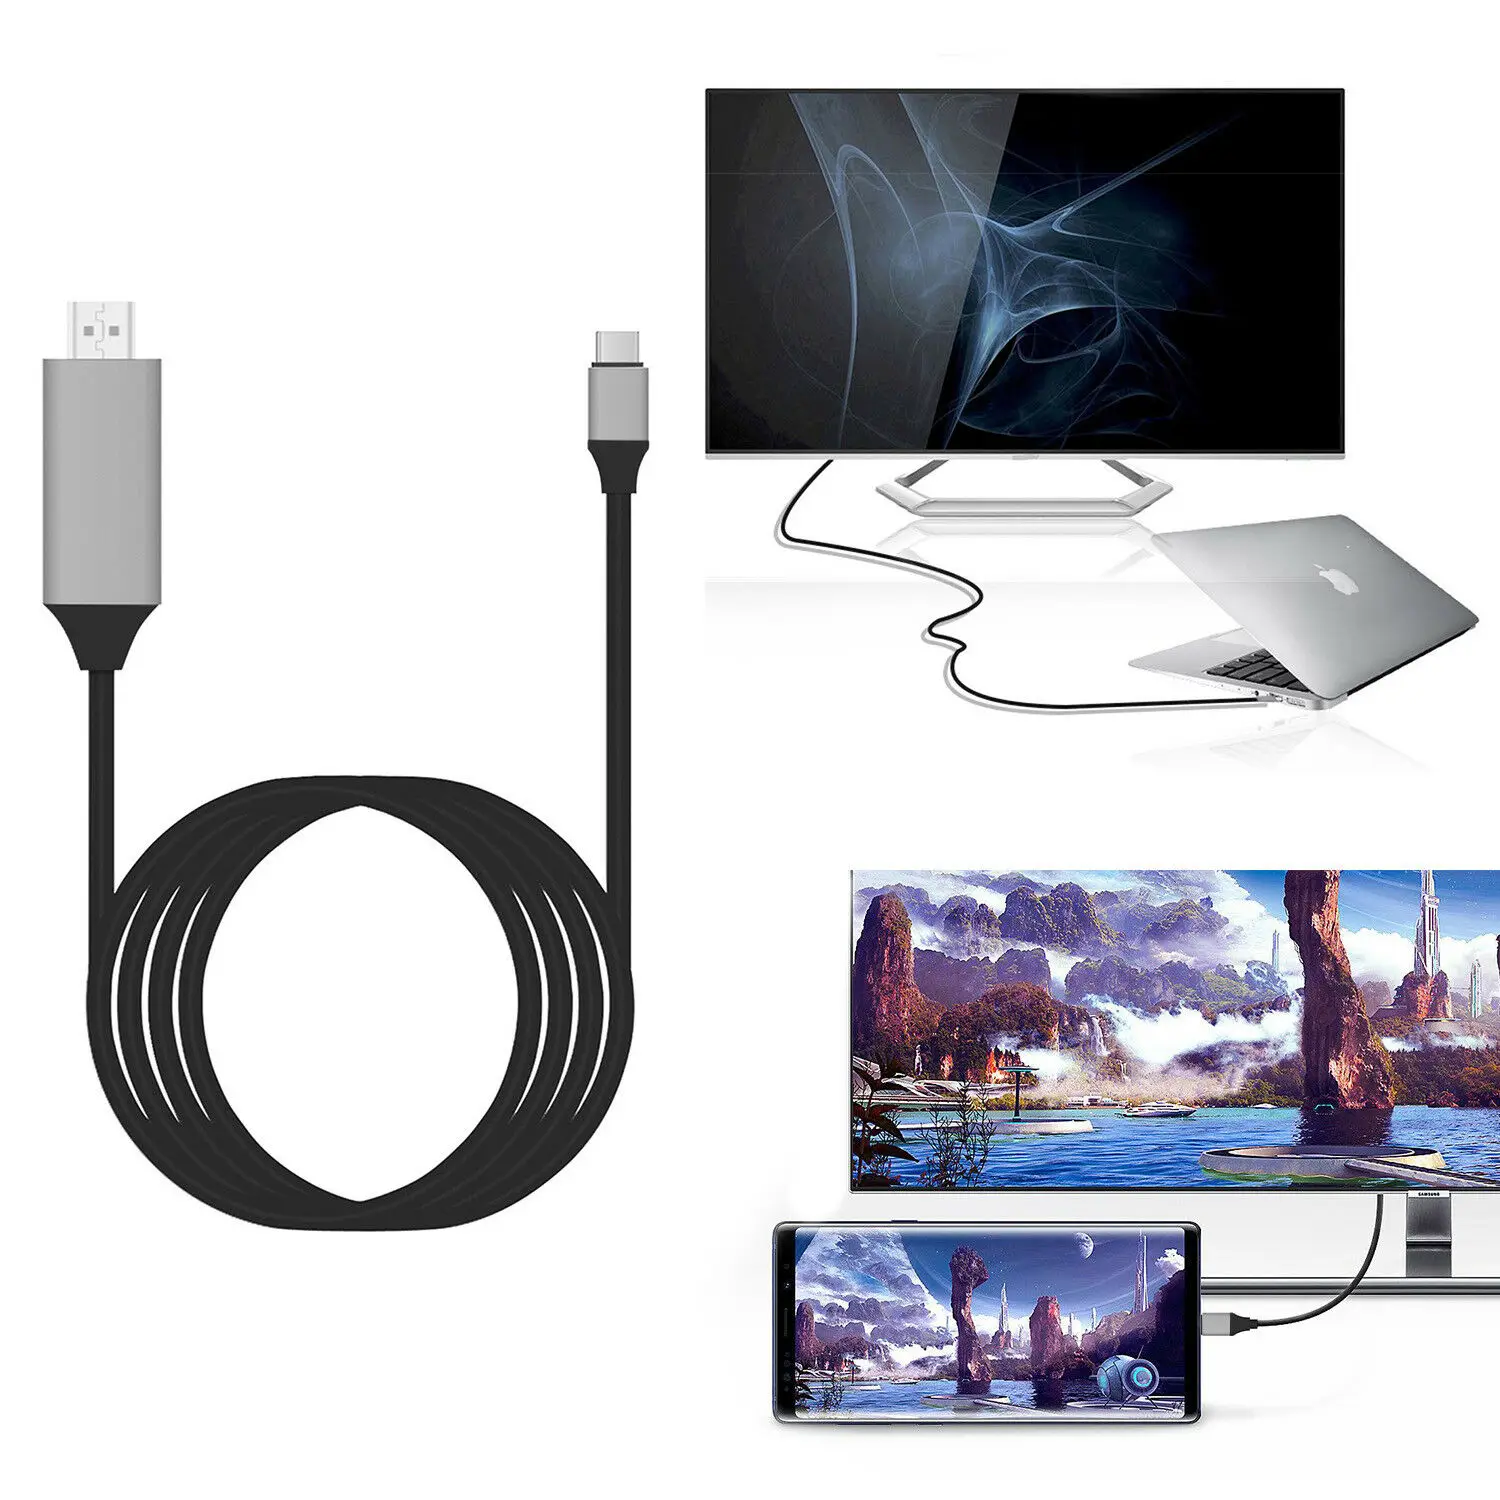 4K USB 3,1 USB-C type C к HDMI кабель HDTV Hdmi адаптер для lenovo ThinkPad X1 MacBook Pro samsung S8 S9 NOTE8